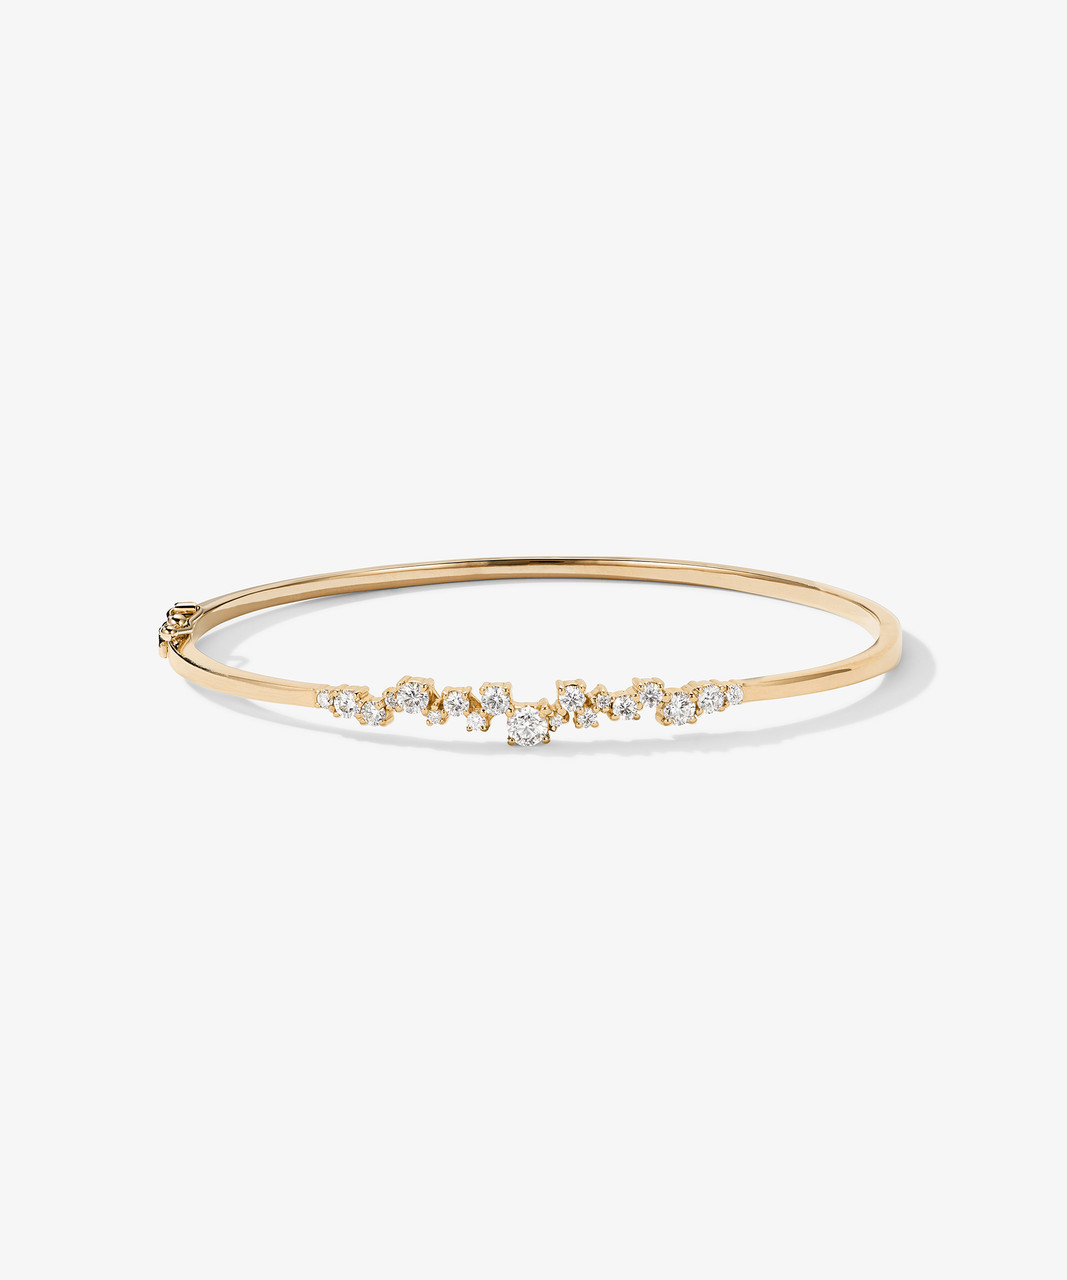 Diamond Tennis Bracelet For Men | Ouros Jewels